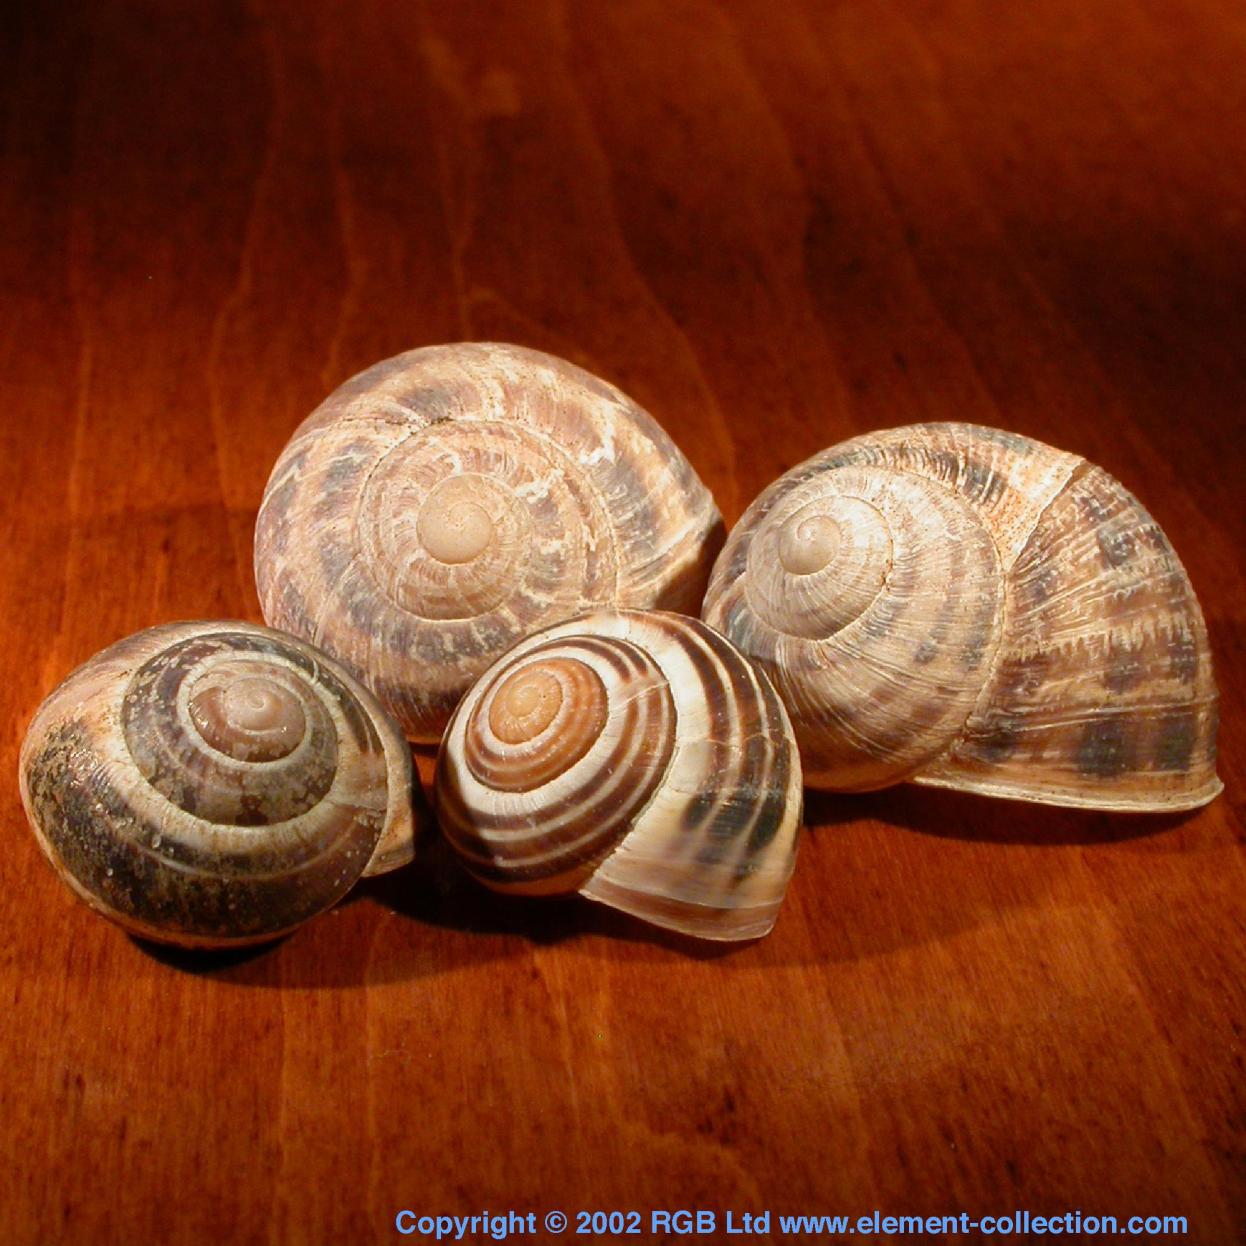 Calcium Snail shells